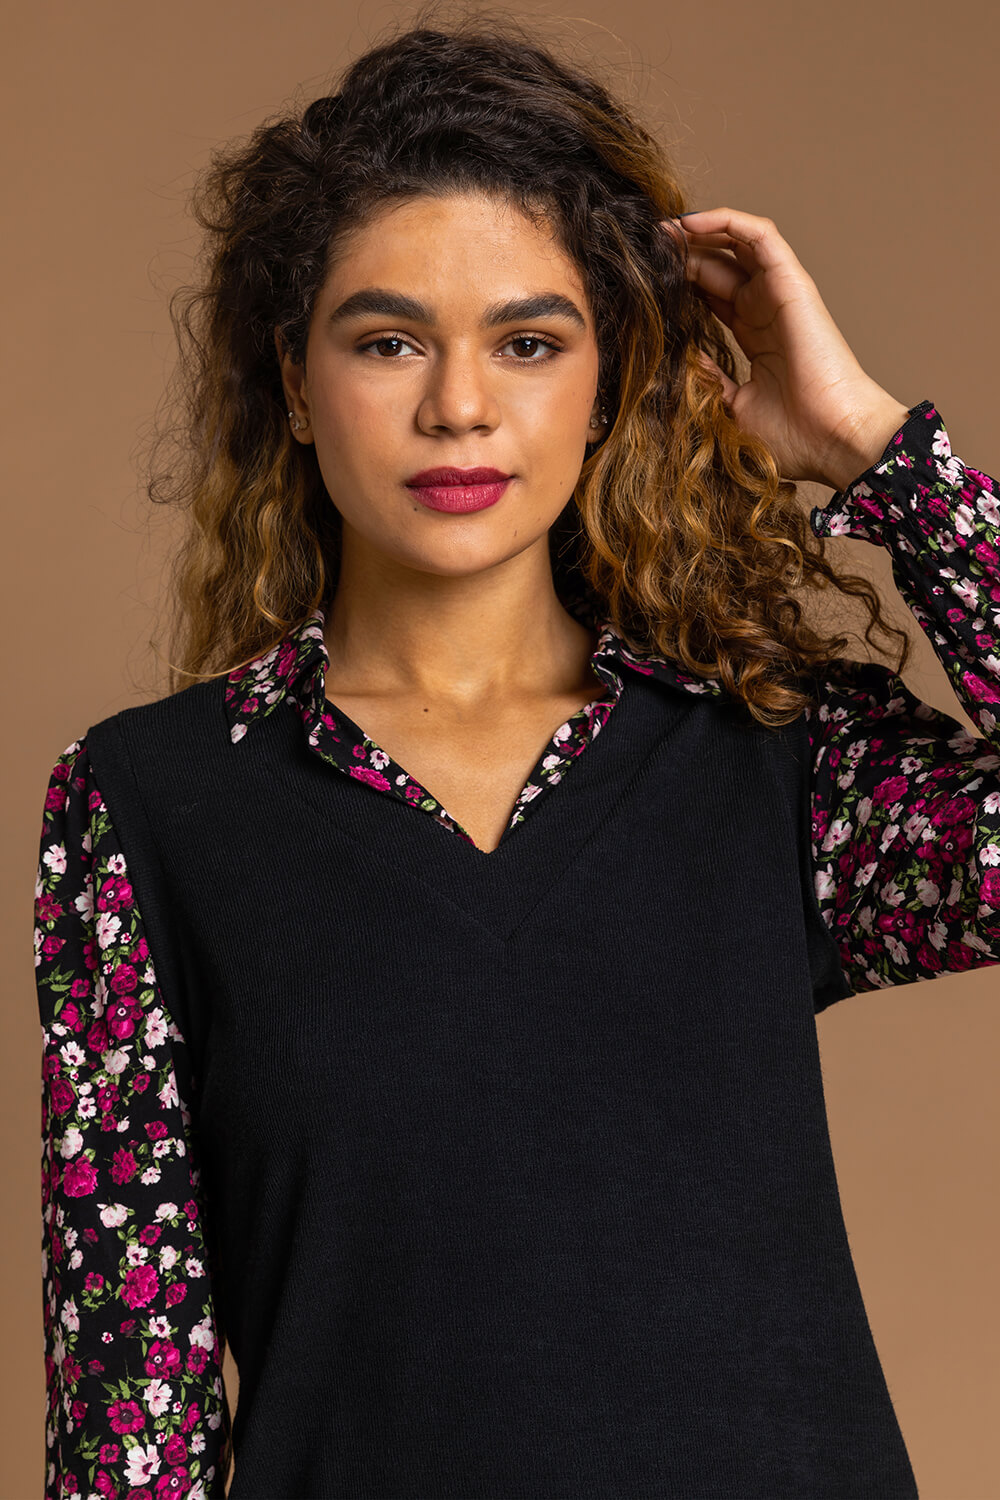 Black Floral Print Sweater Vest Long Sleeve Top, Image 5 of 5